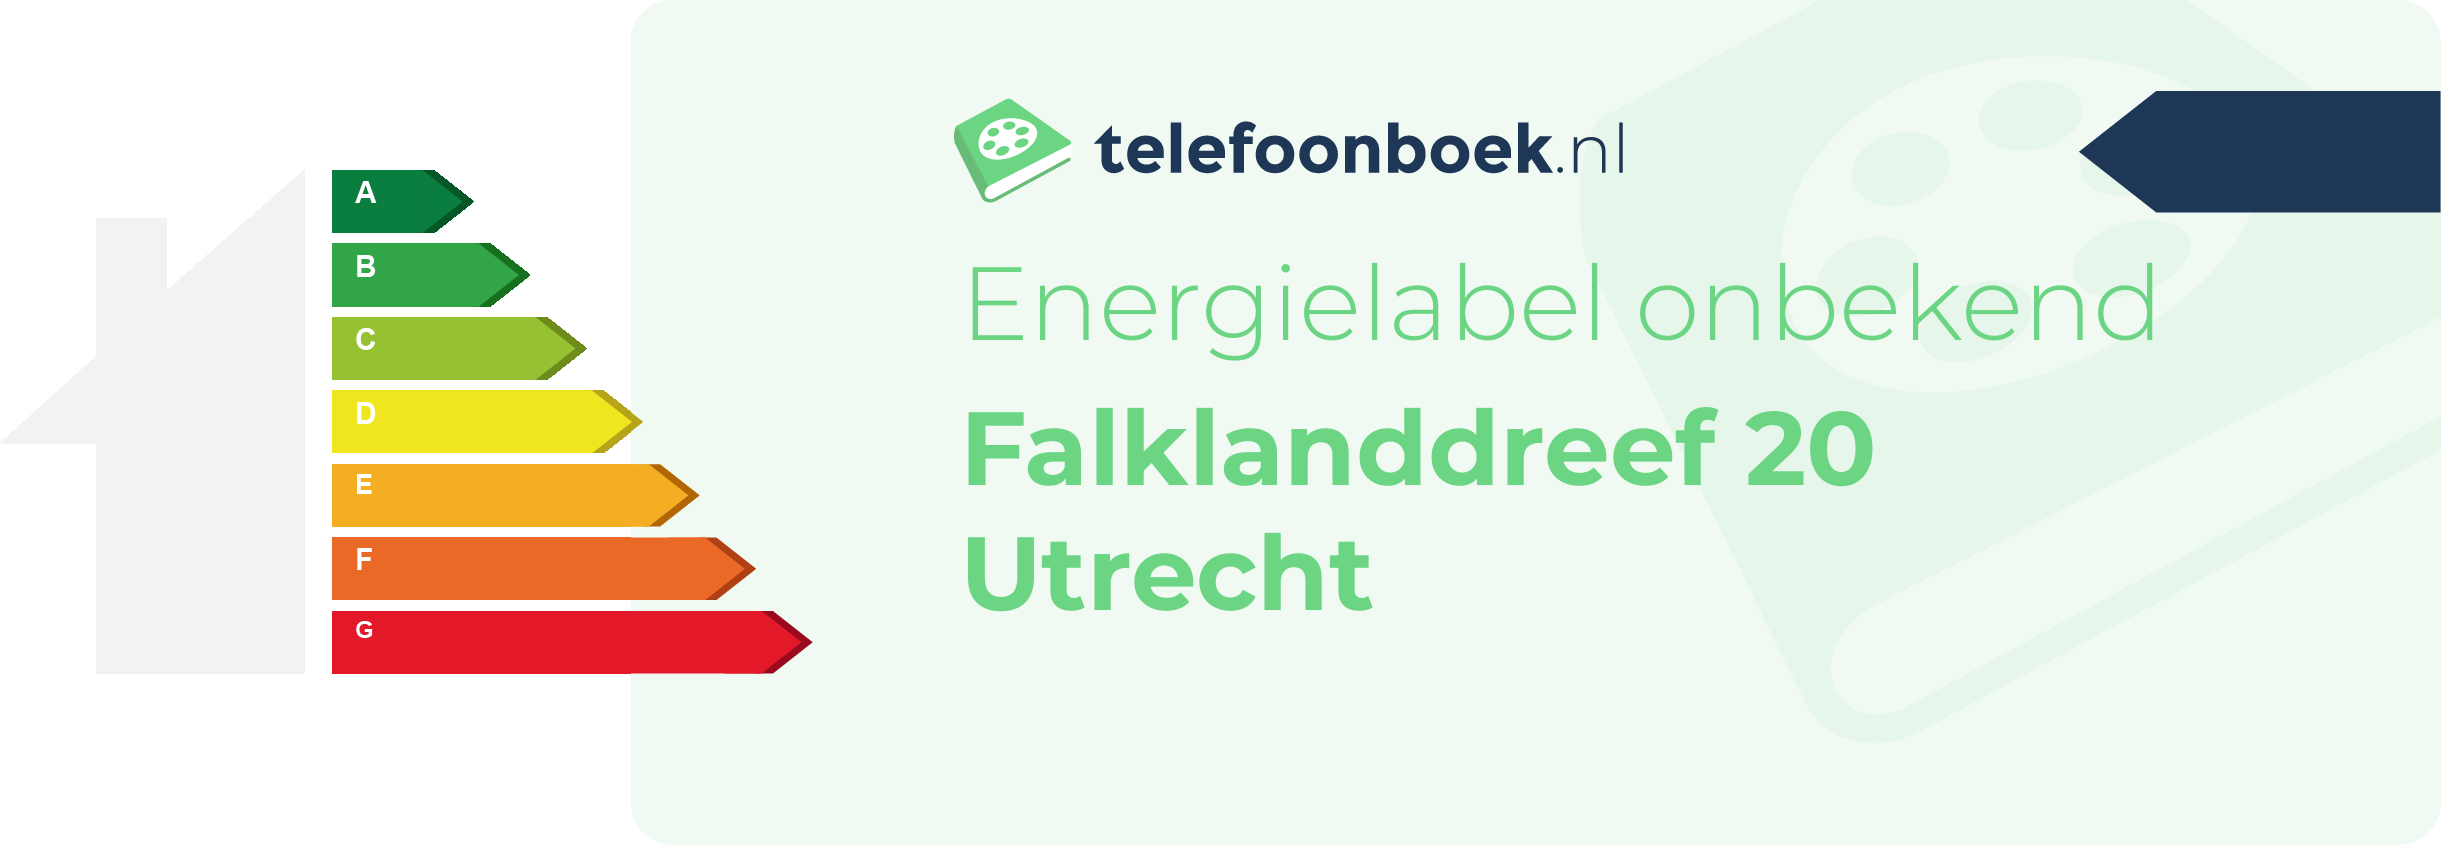 Energielabel Falklanddreef 20 Utrecht